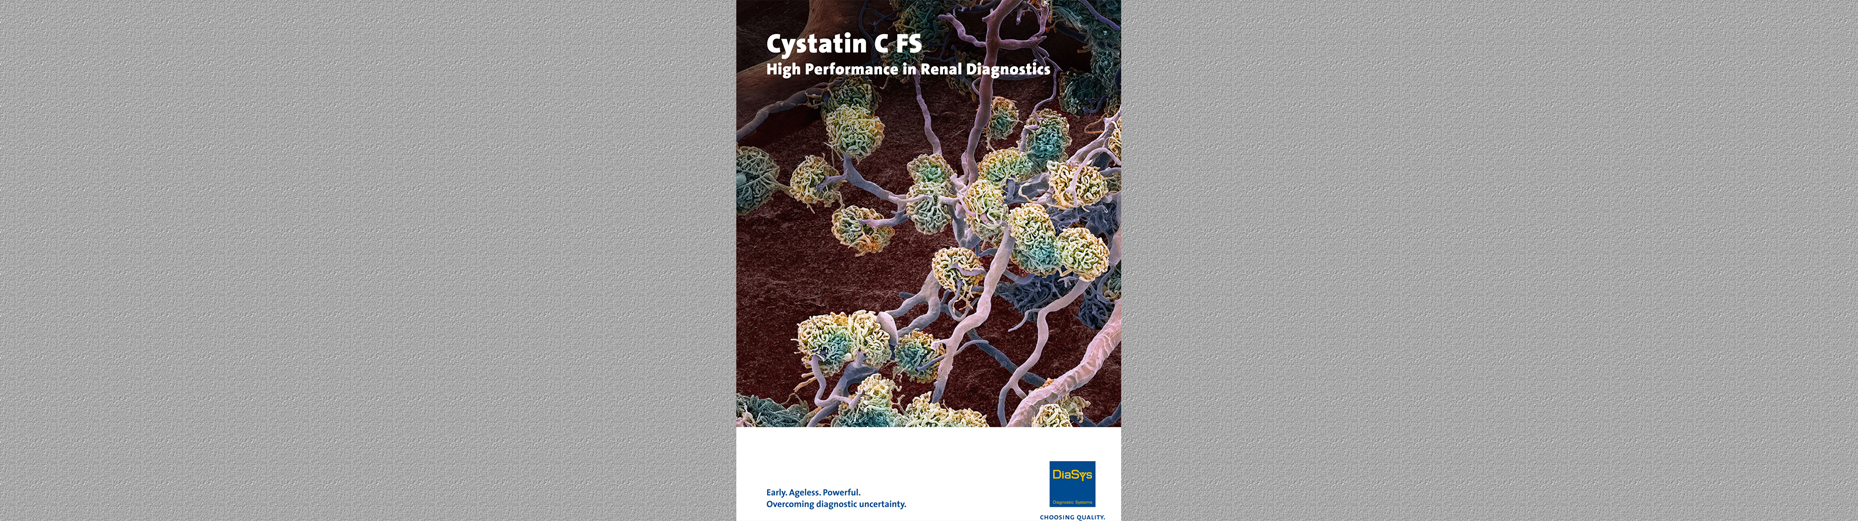 Cystatin C FS Brochure